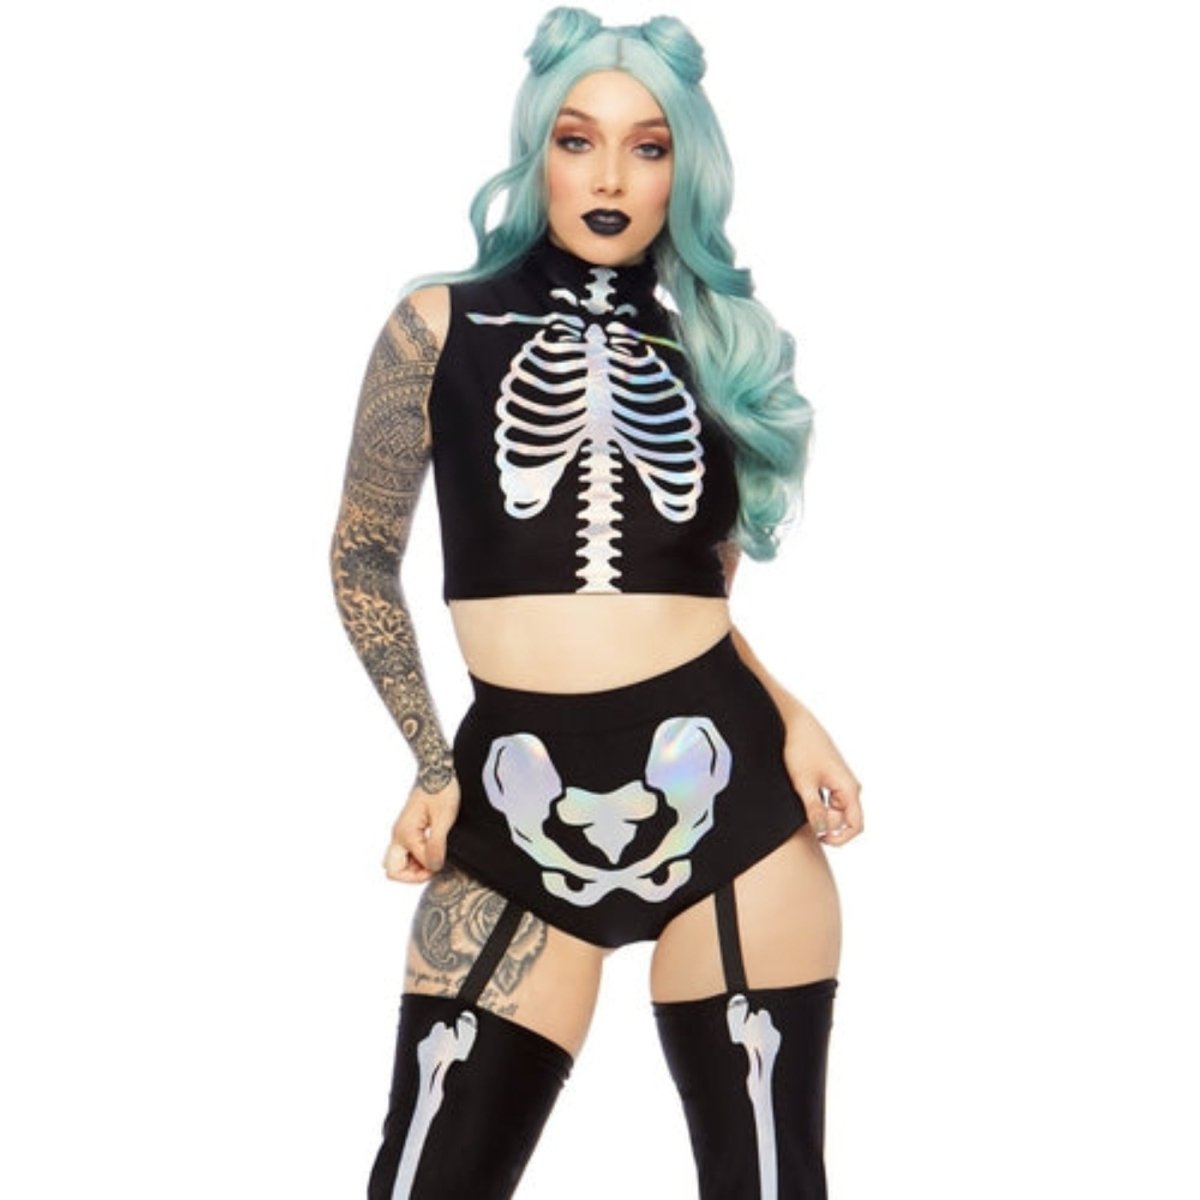 Holographic Skeleton Costume - worldclasscostumes